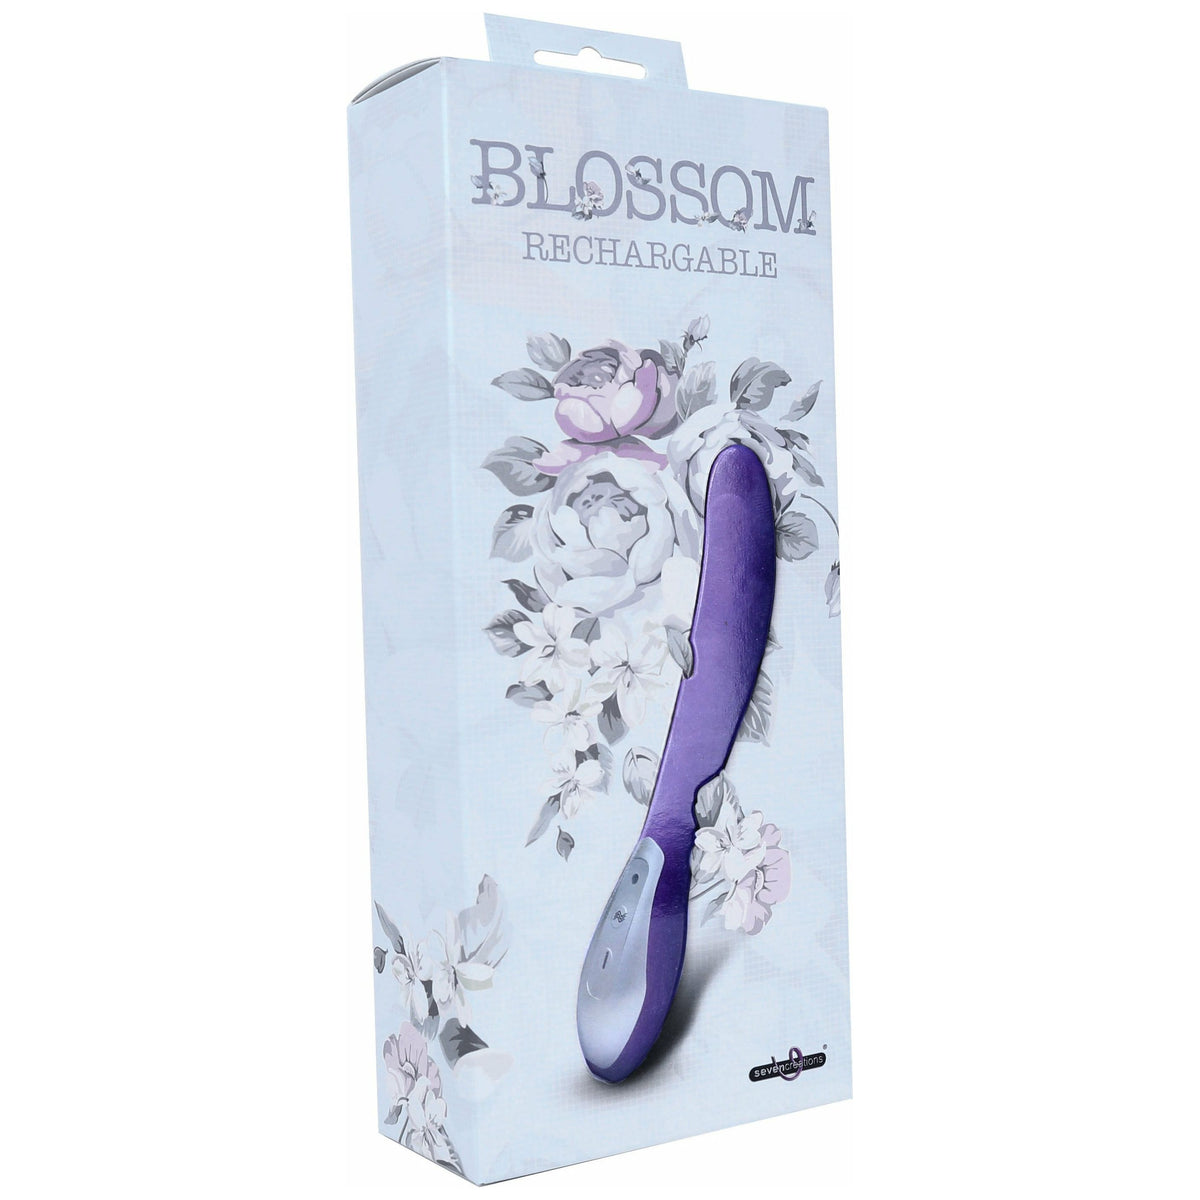 Blossom Rechargeable G-Spot Vibrator - Purple